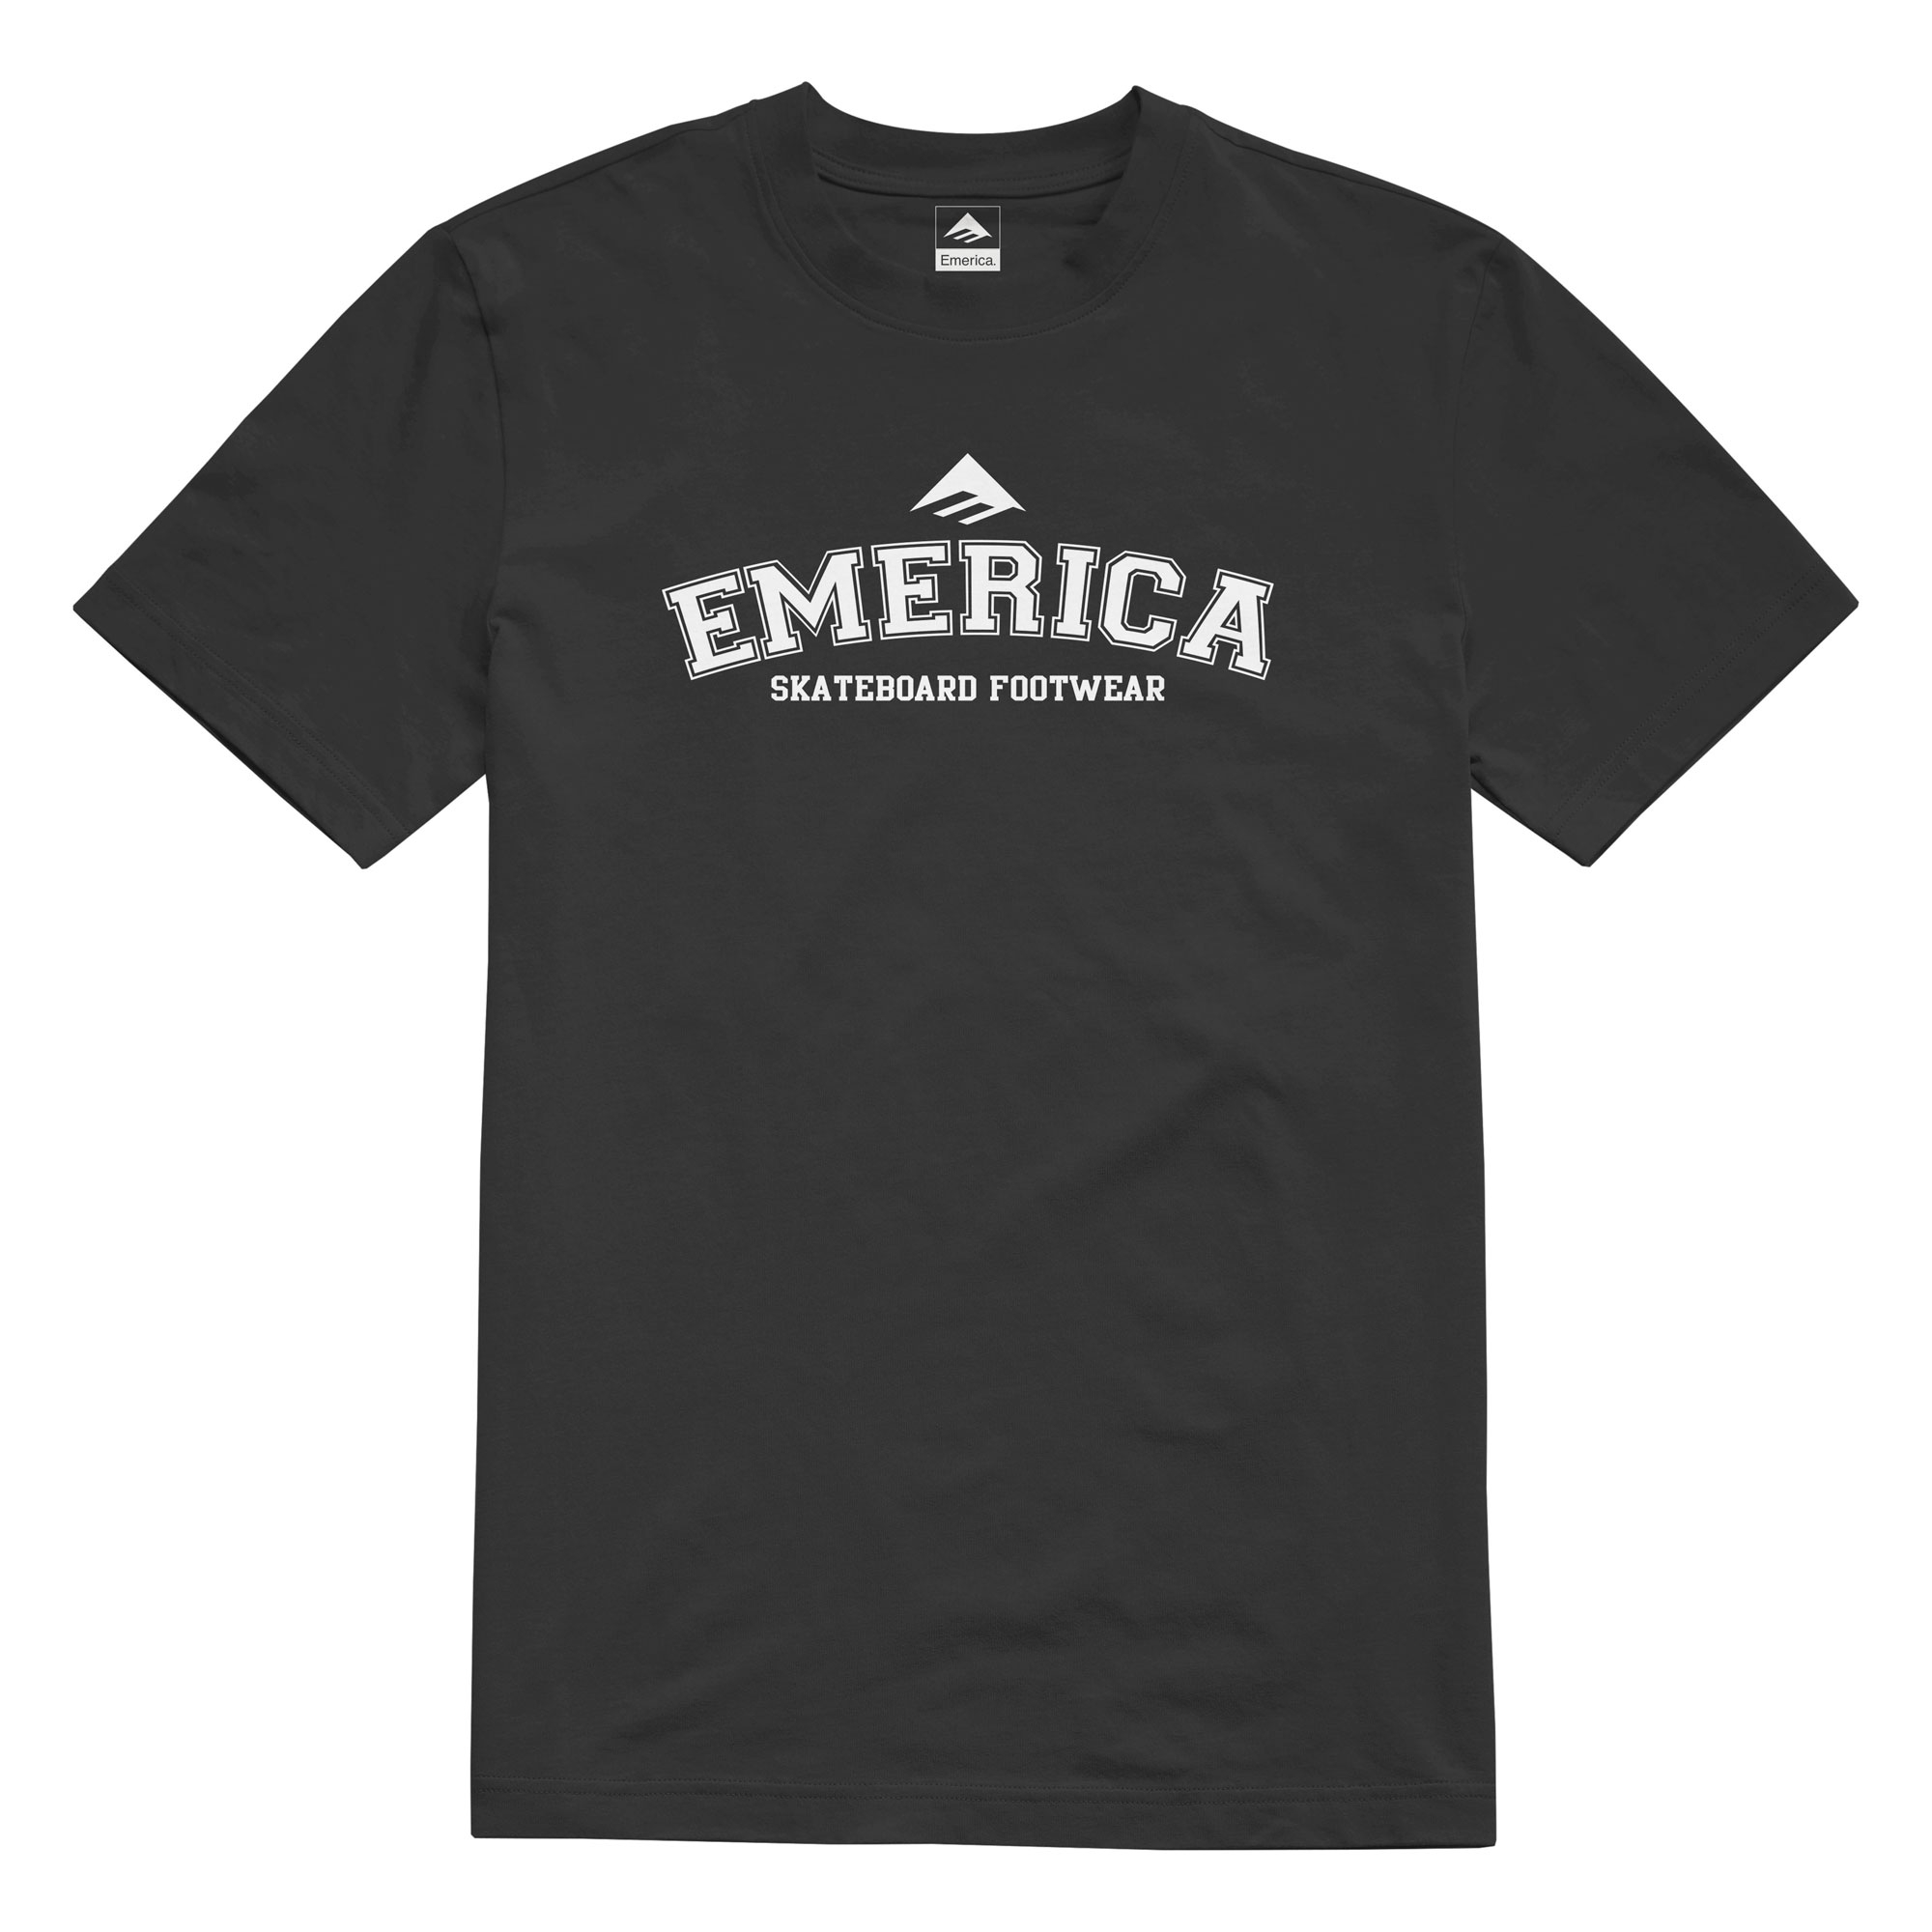 EMERICA T-Shirt COLLEGIATE black